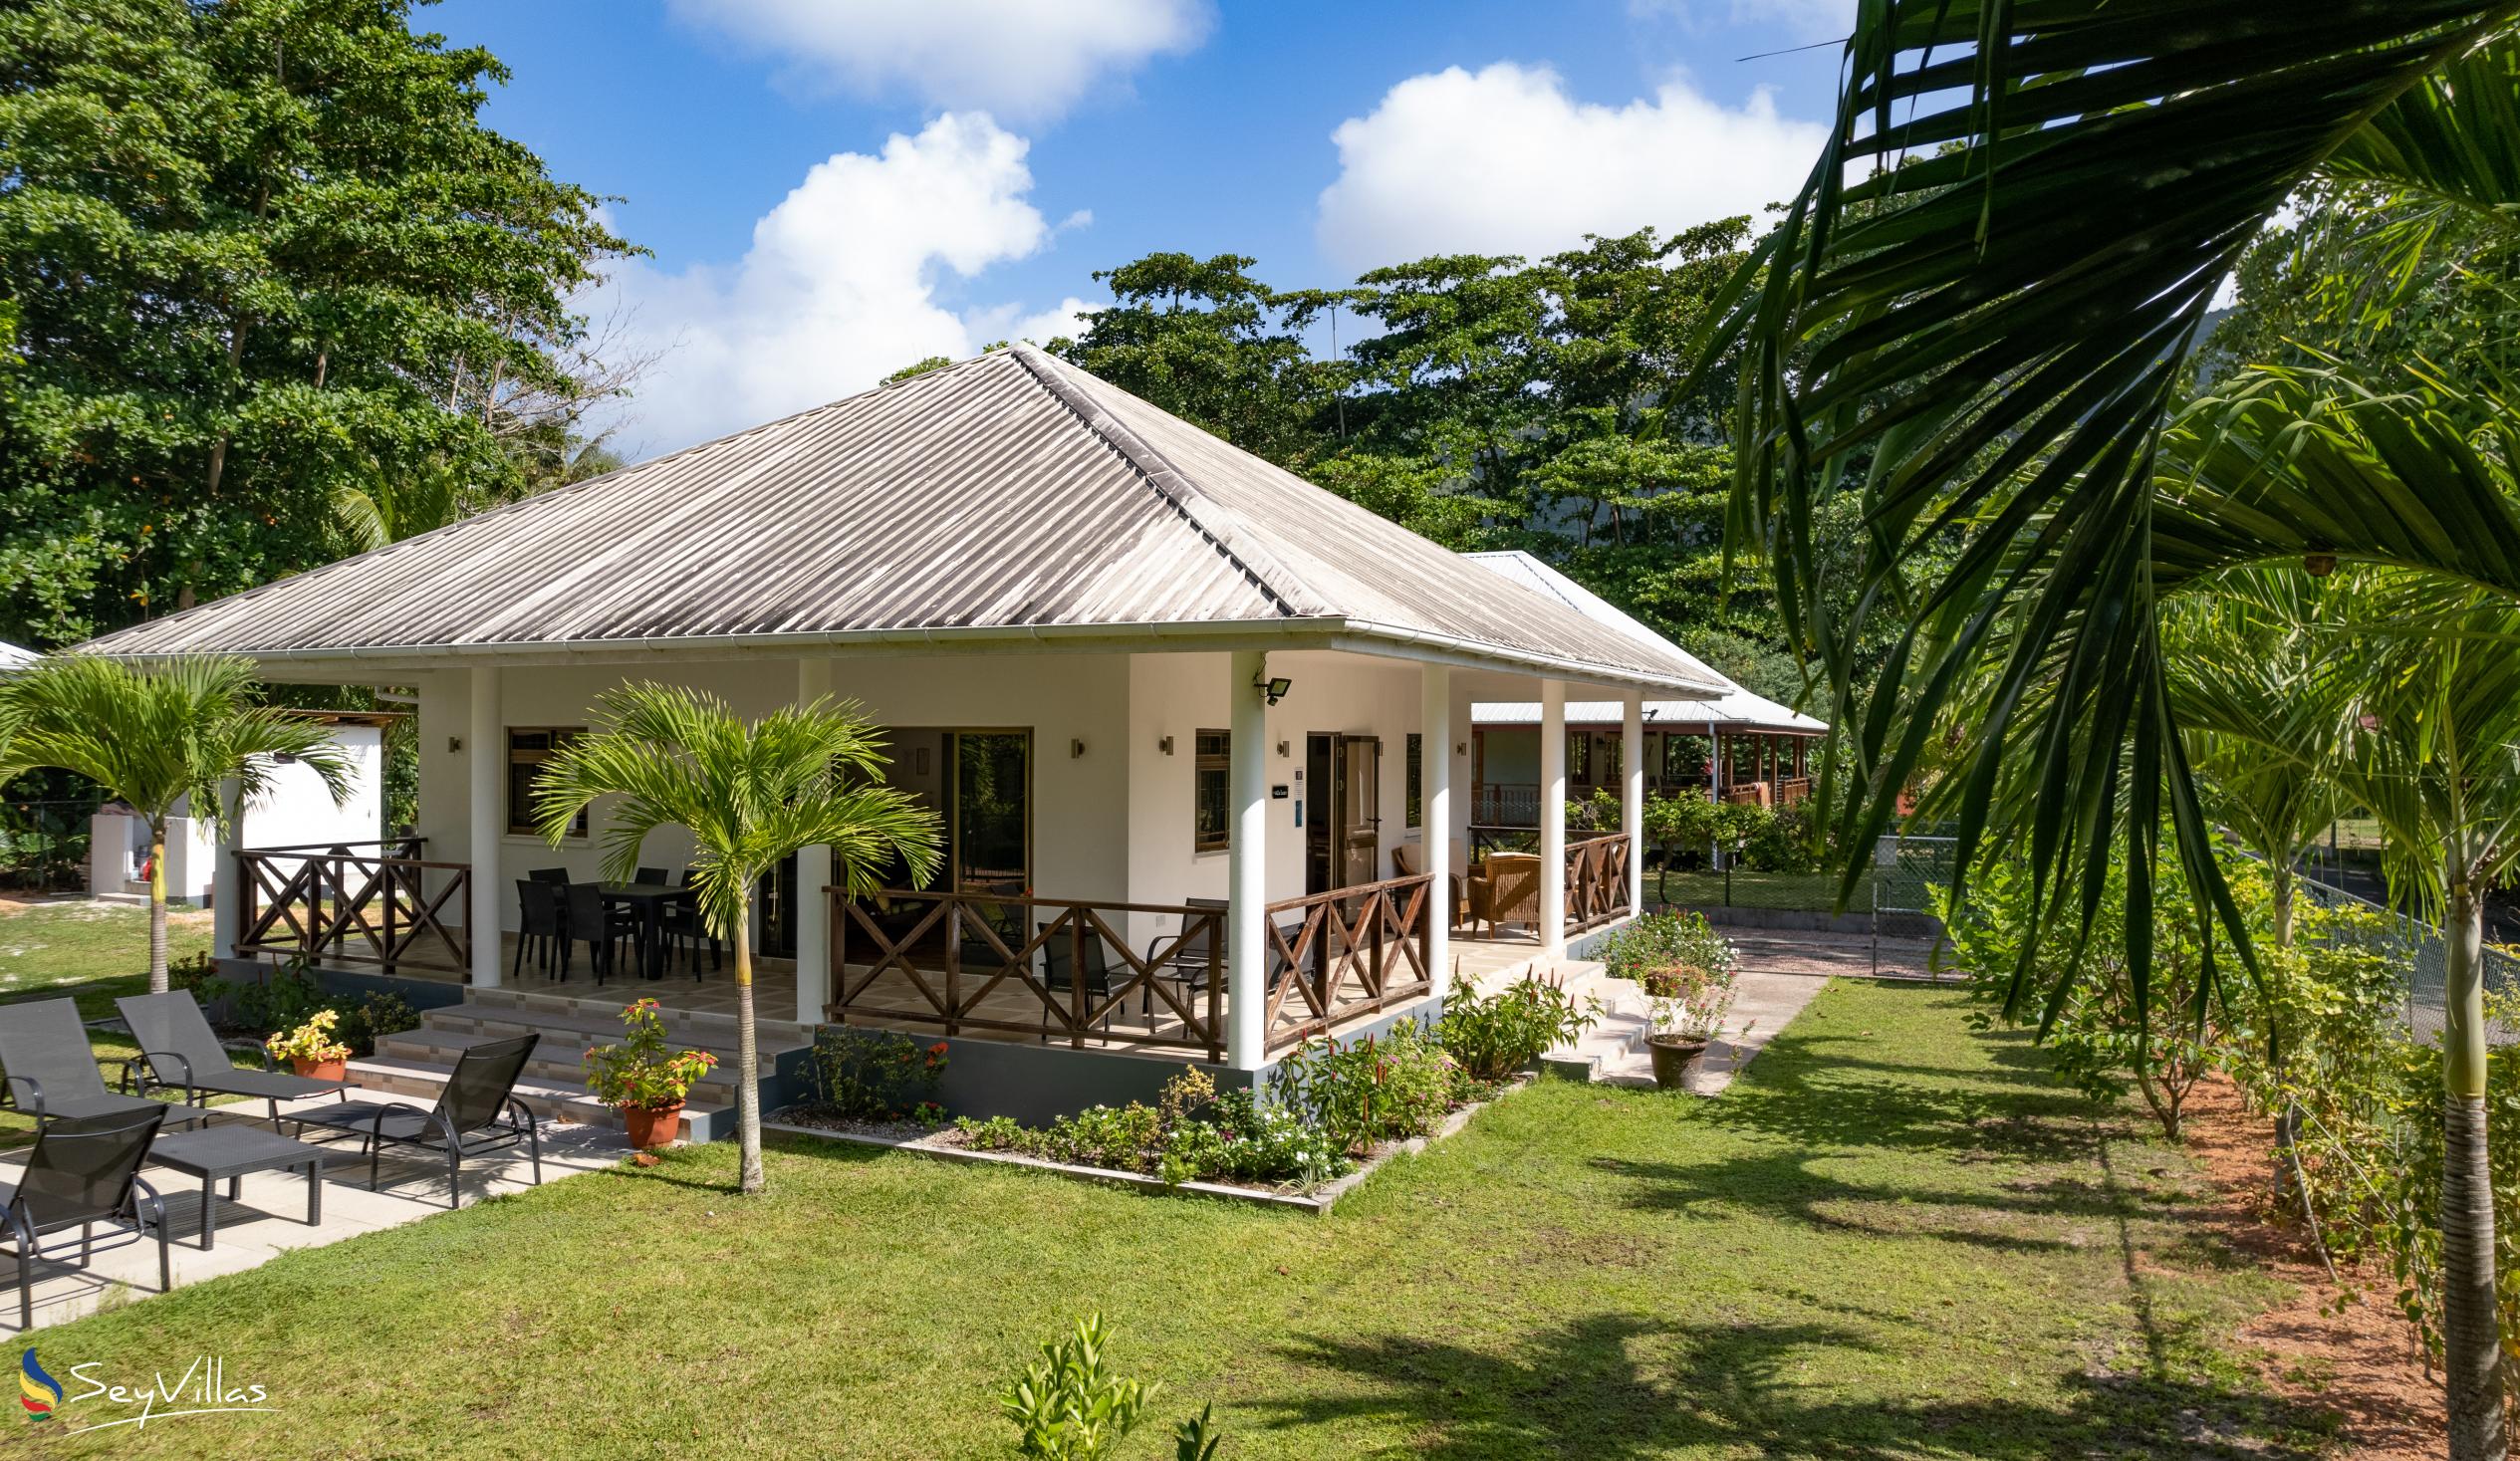 Foto 11: Villa Laure - Villa Laure - Praslin (Seychellen)